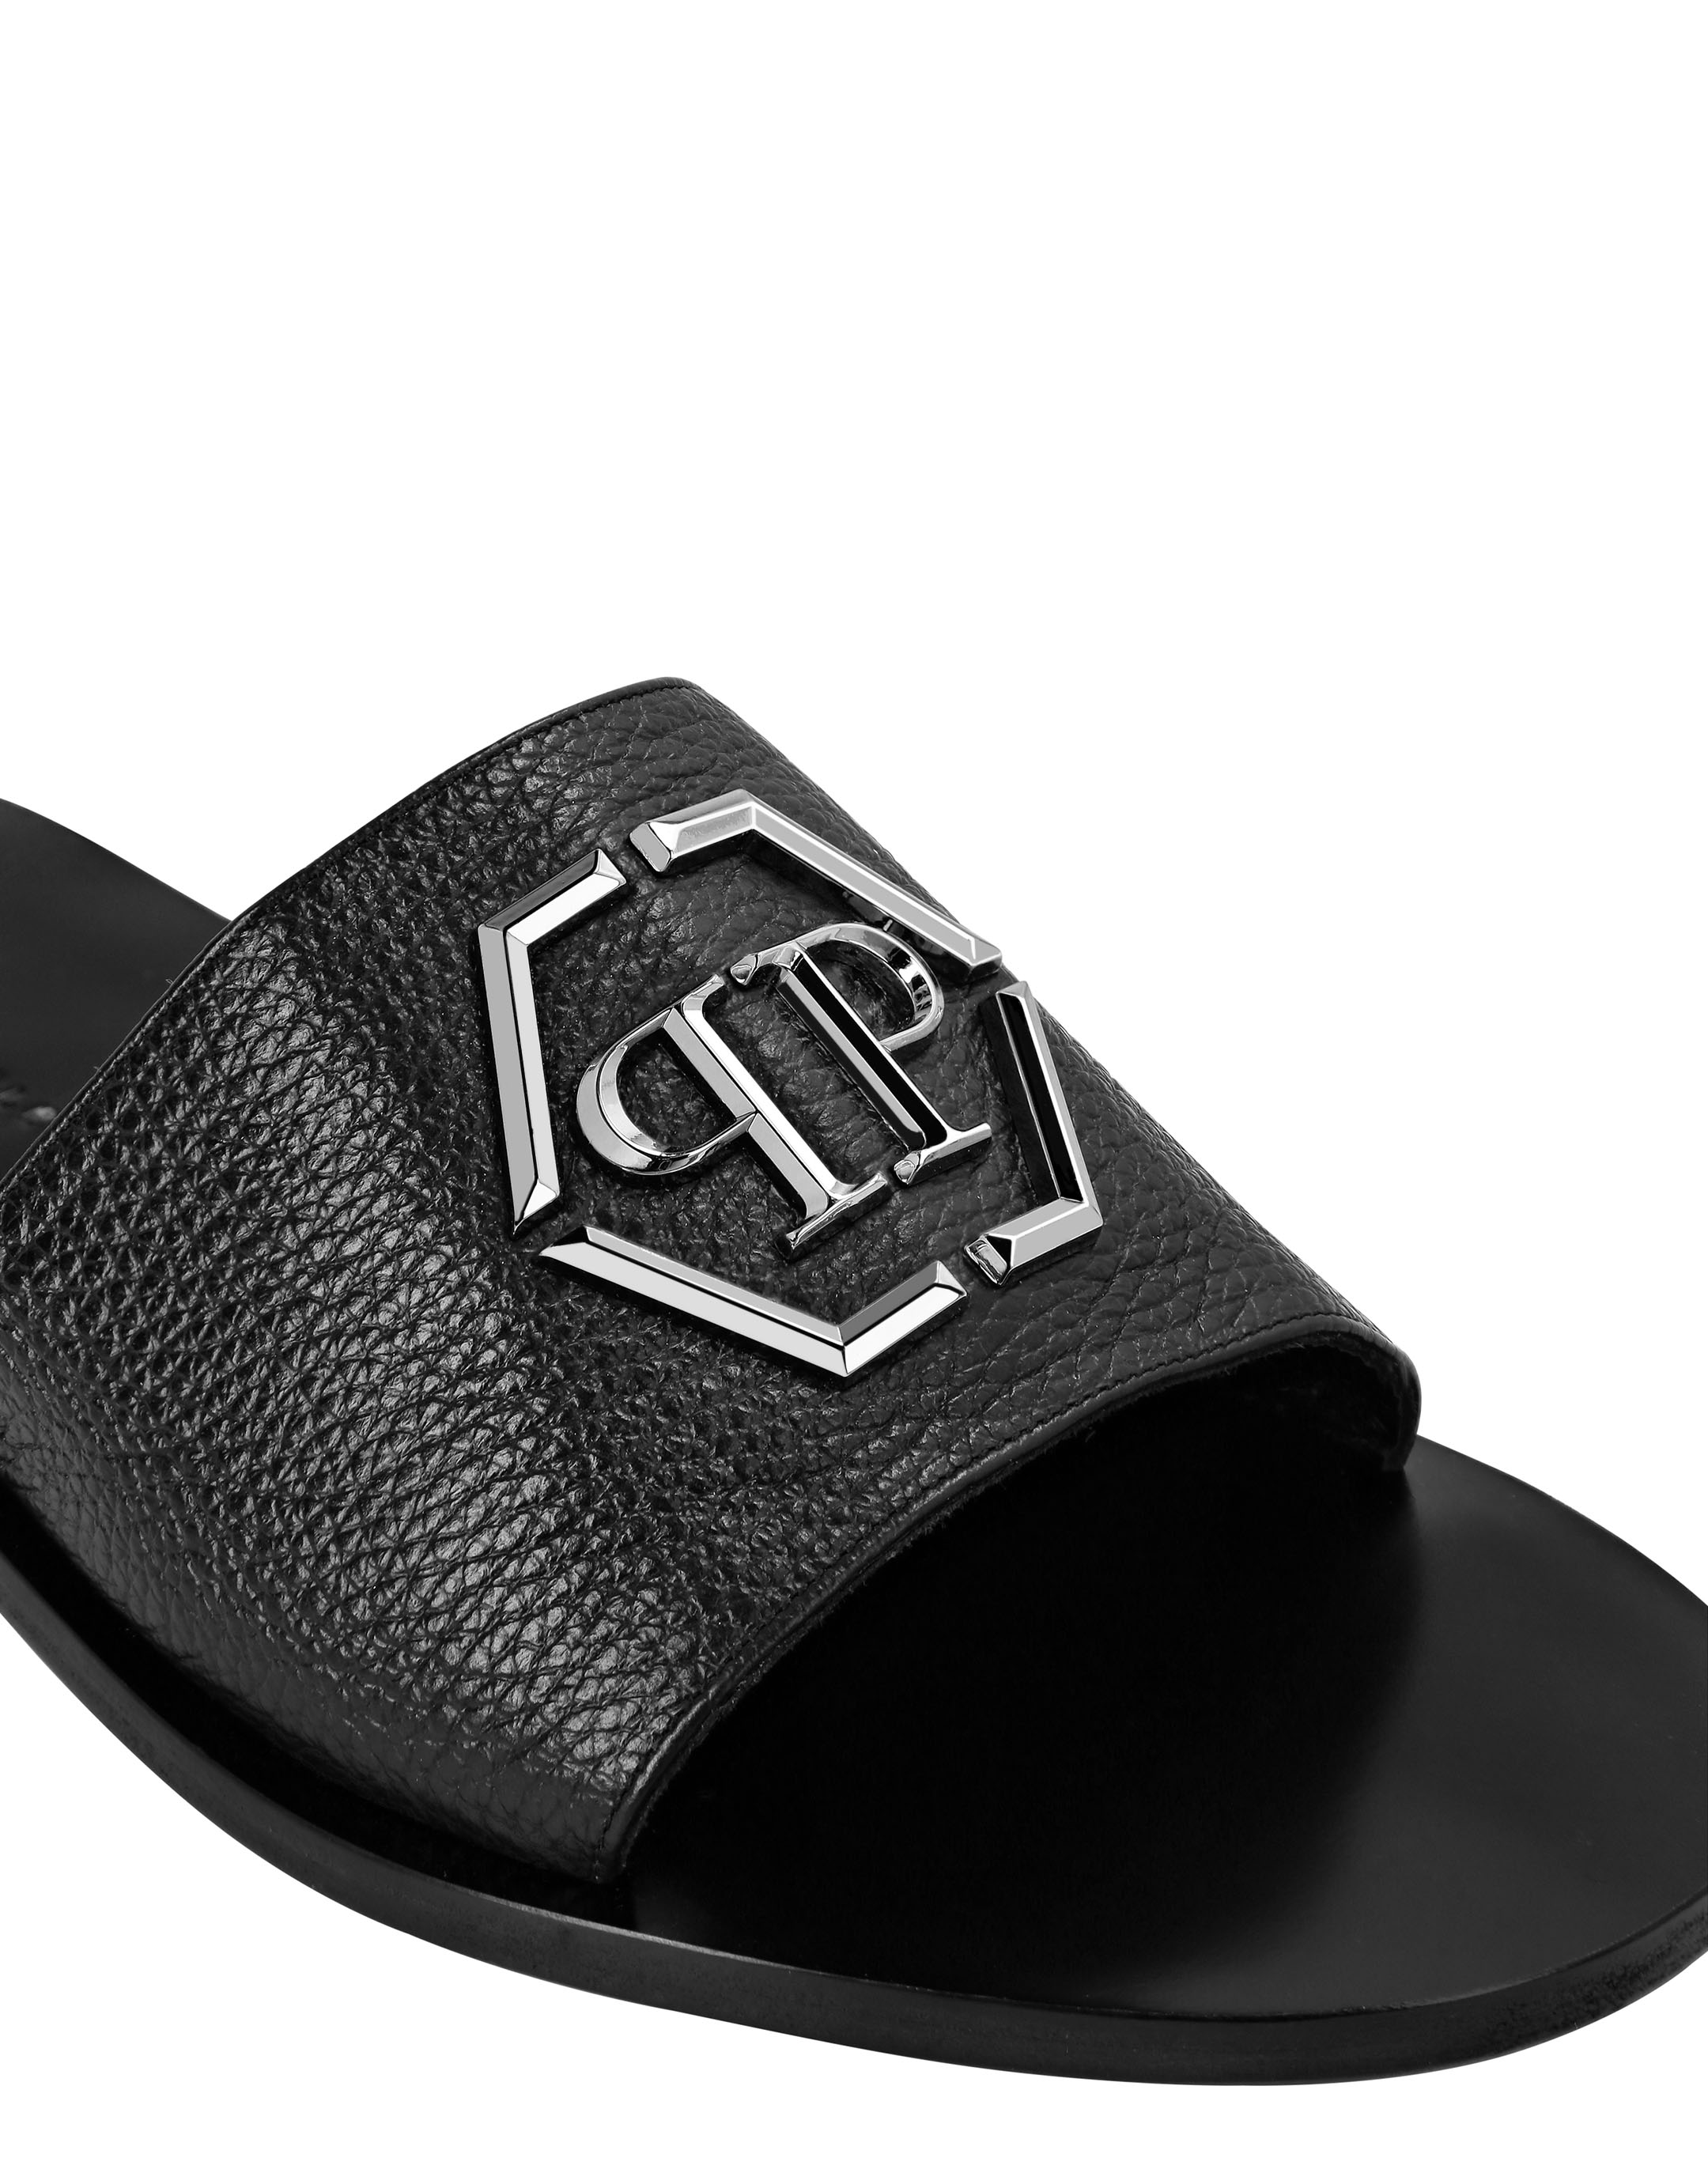 Leather Sandals Flat Gothic Plein | Philipp Plein Outlet